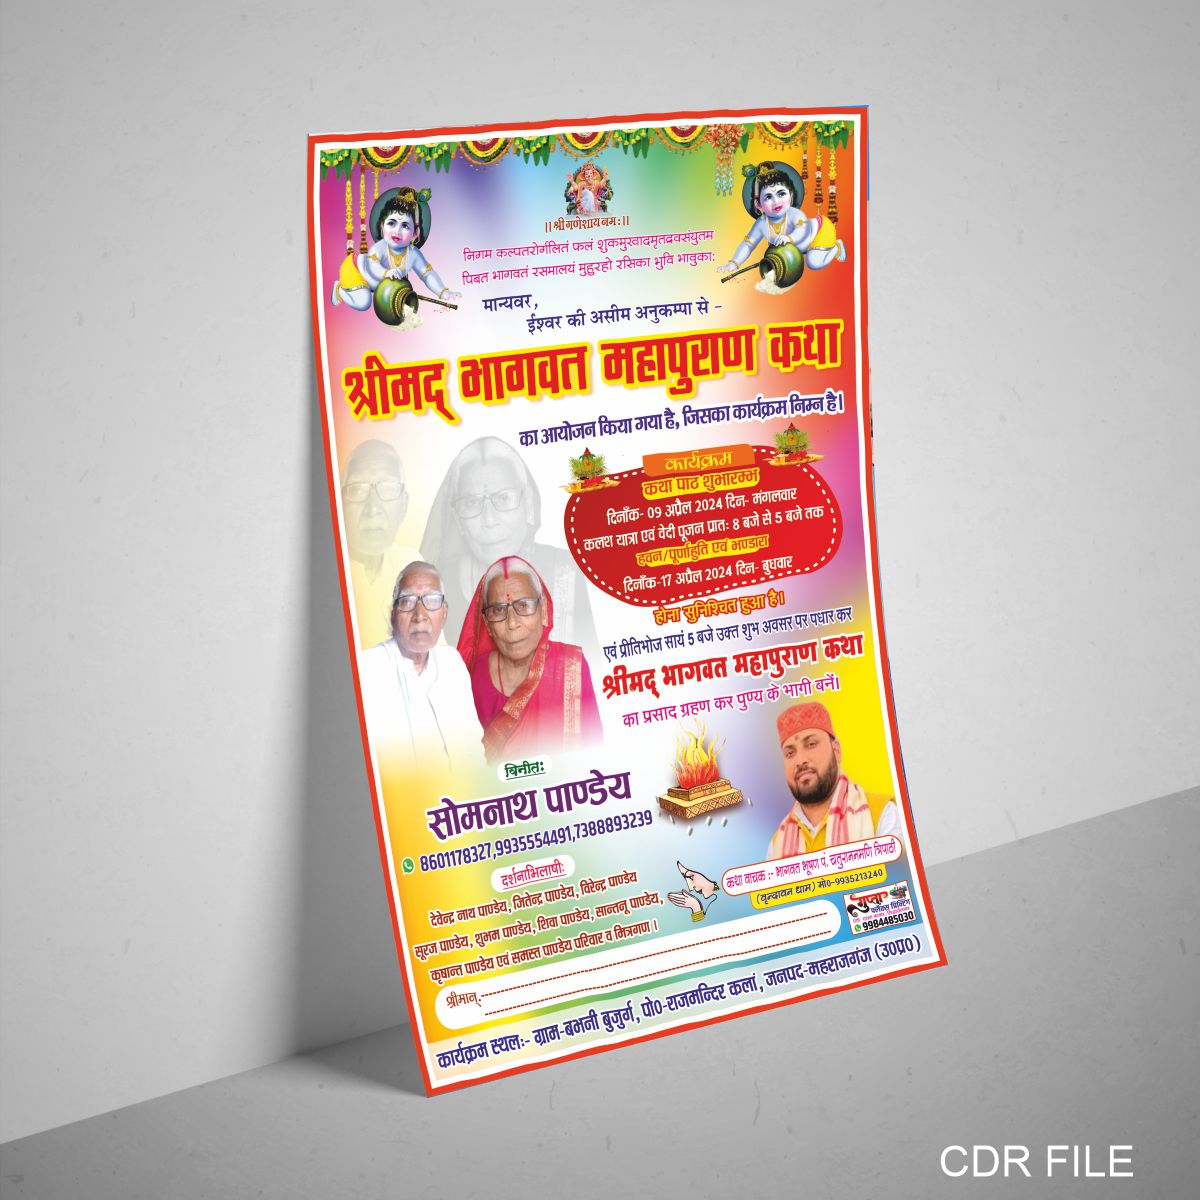 Shrimad Bhagwat Katha and Shrimad Bhagwat mahapuran Katha Invitation Card Design Cdr File dow DIGITAL CARD CARD